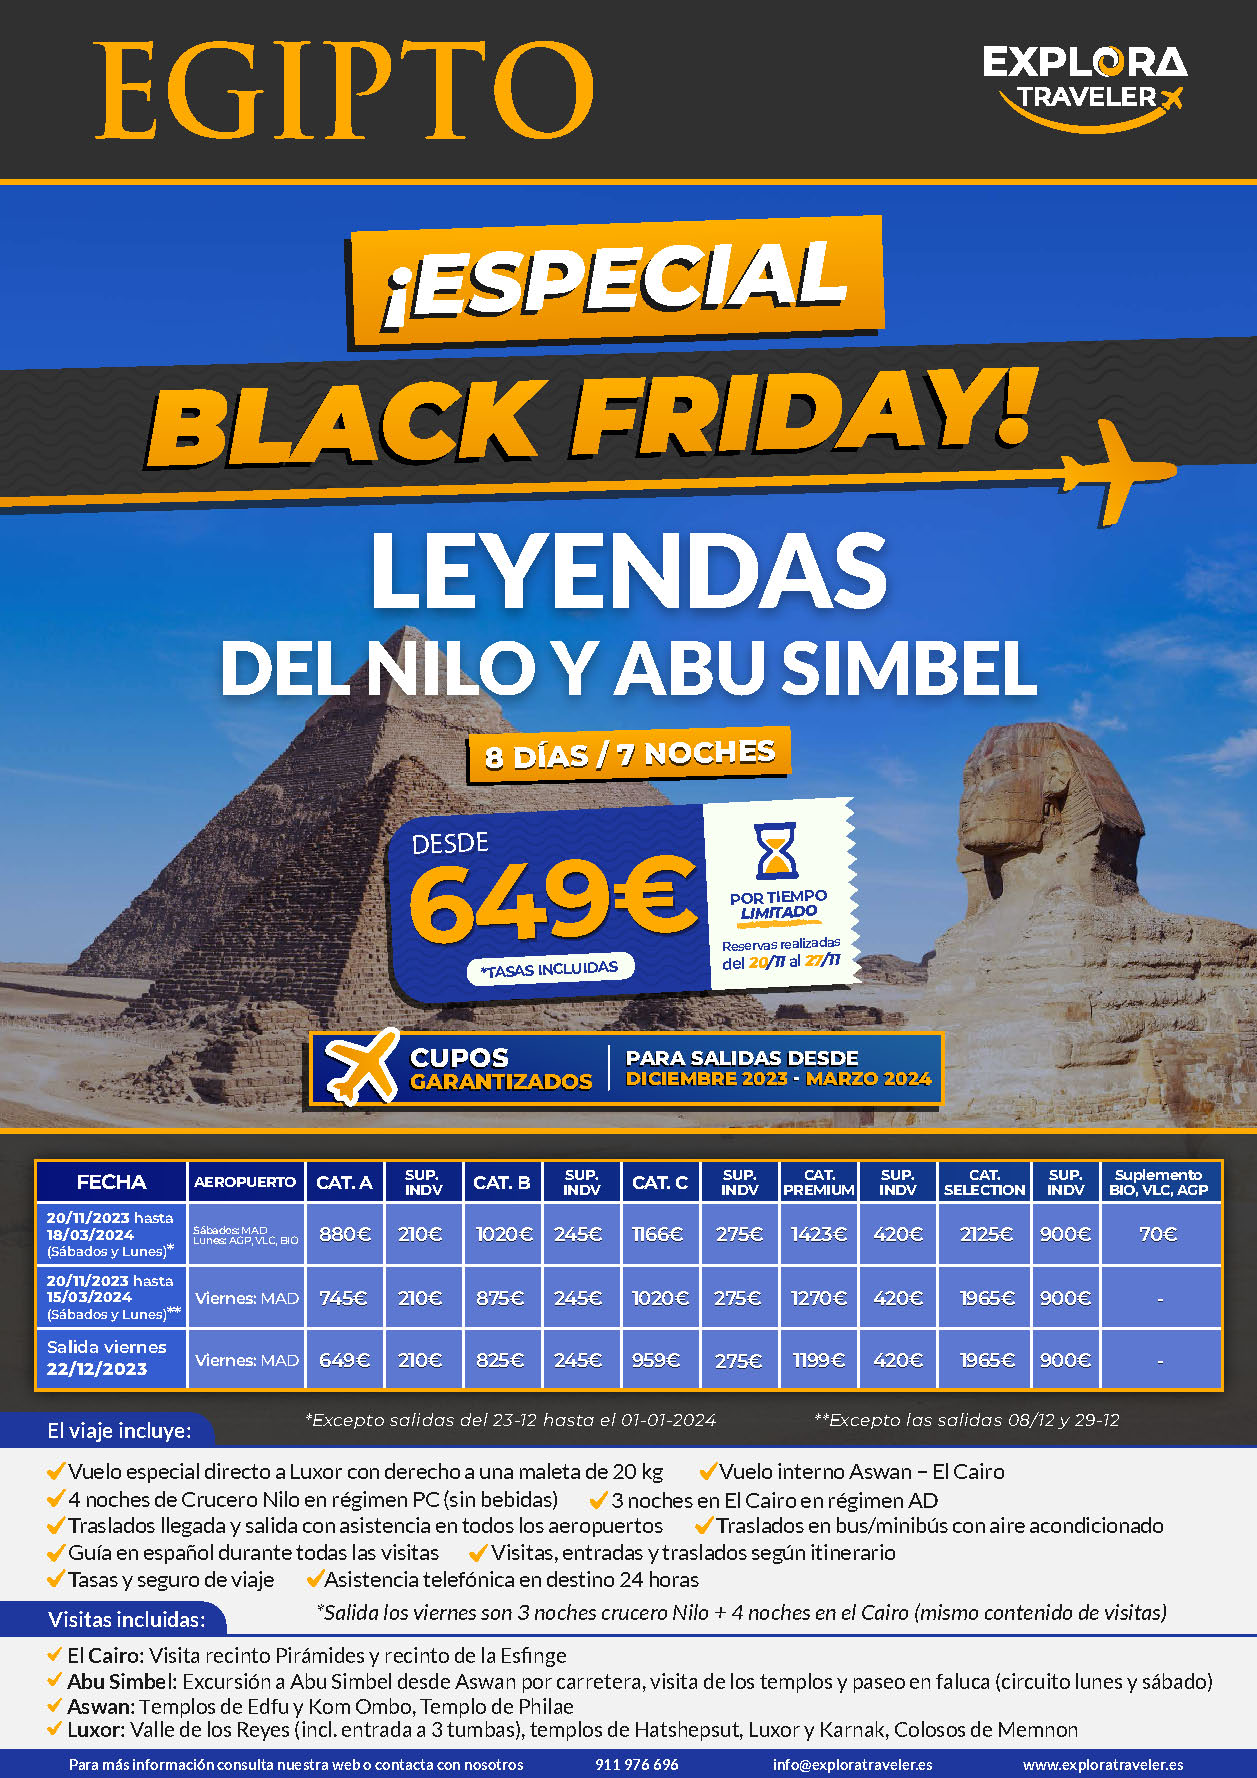 Oferta Explora Traveler Black Friday Egipto Charter Leyendas del Nilo y Abu Simbel 8 dias salidas 2023 2024 vuelo directo desde Madrid Barcelona Valencia Malaga